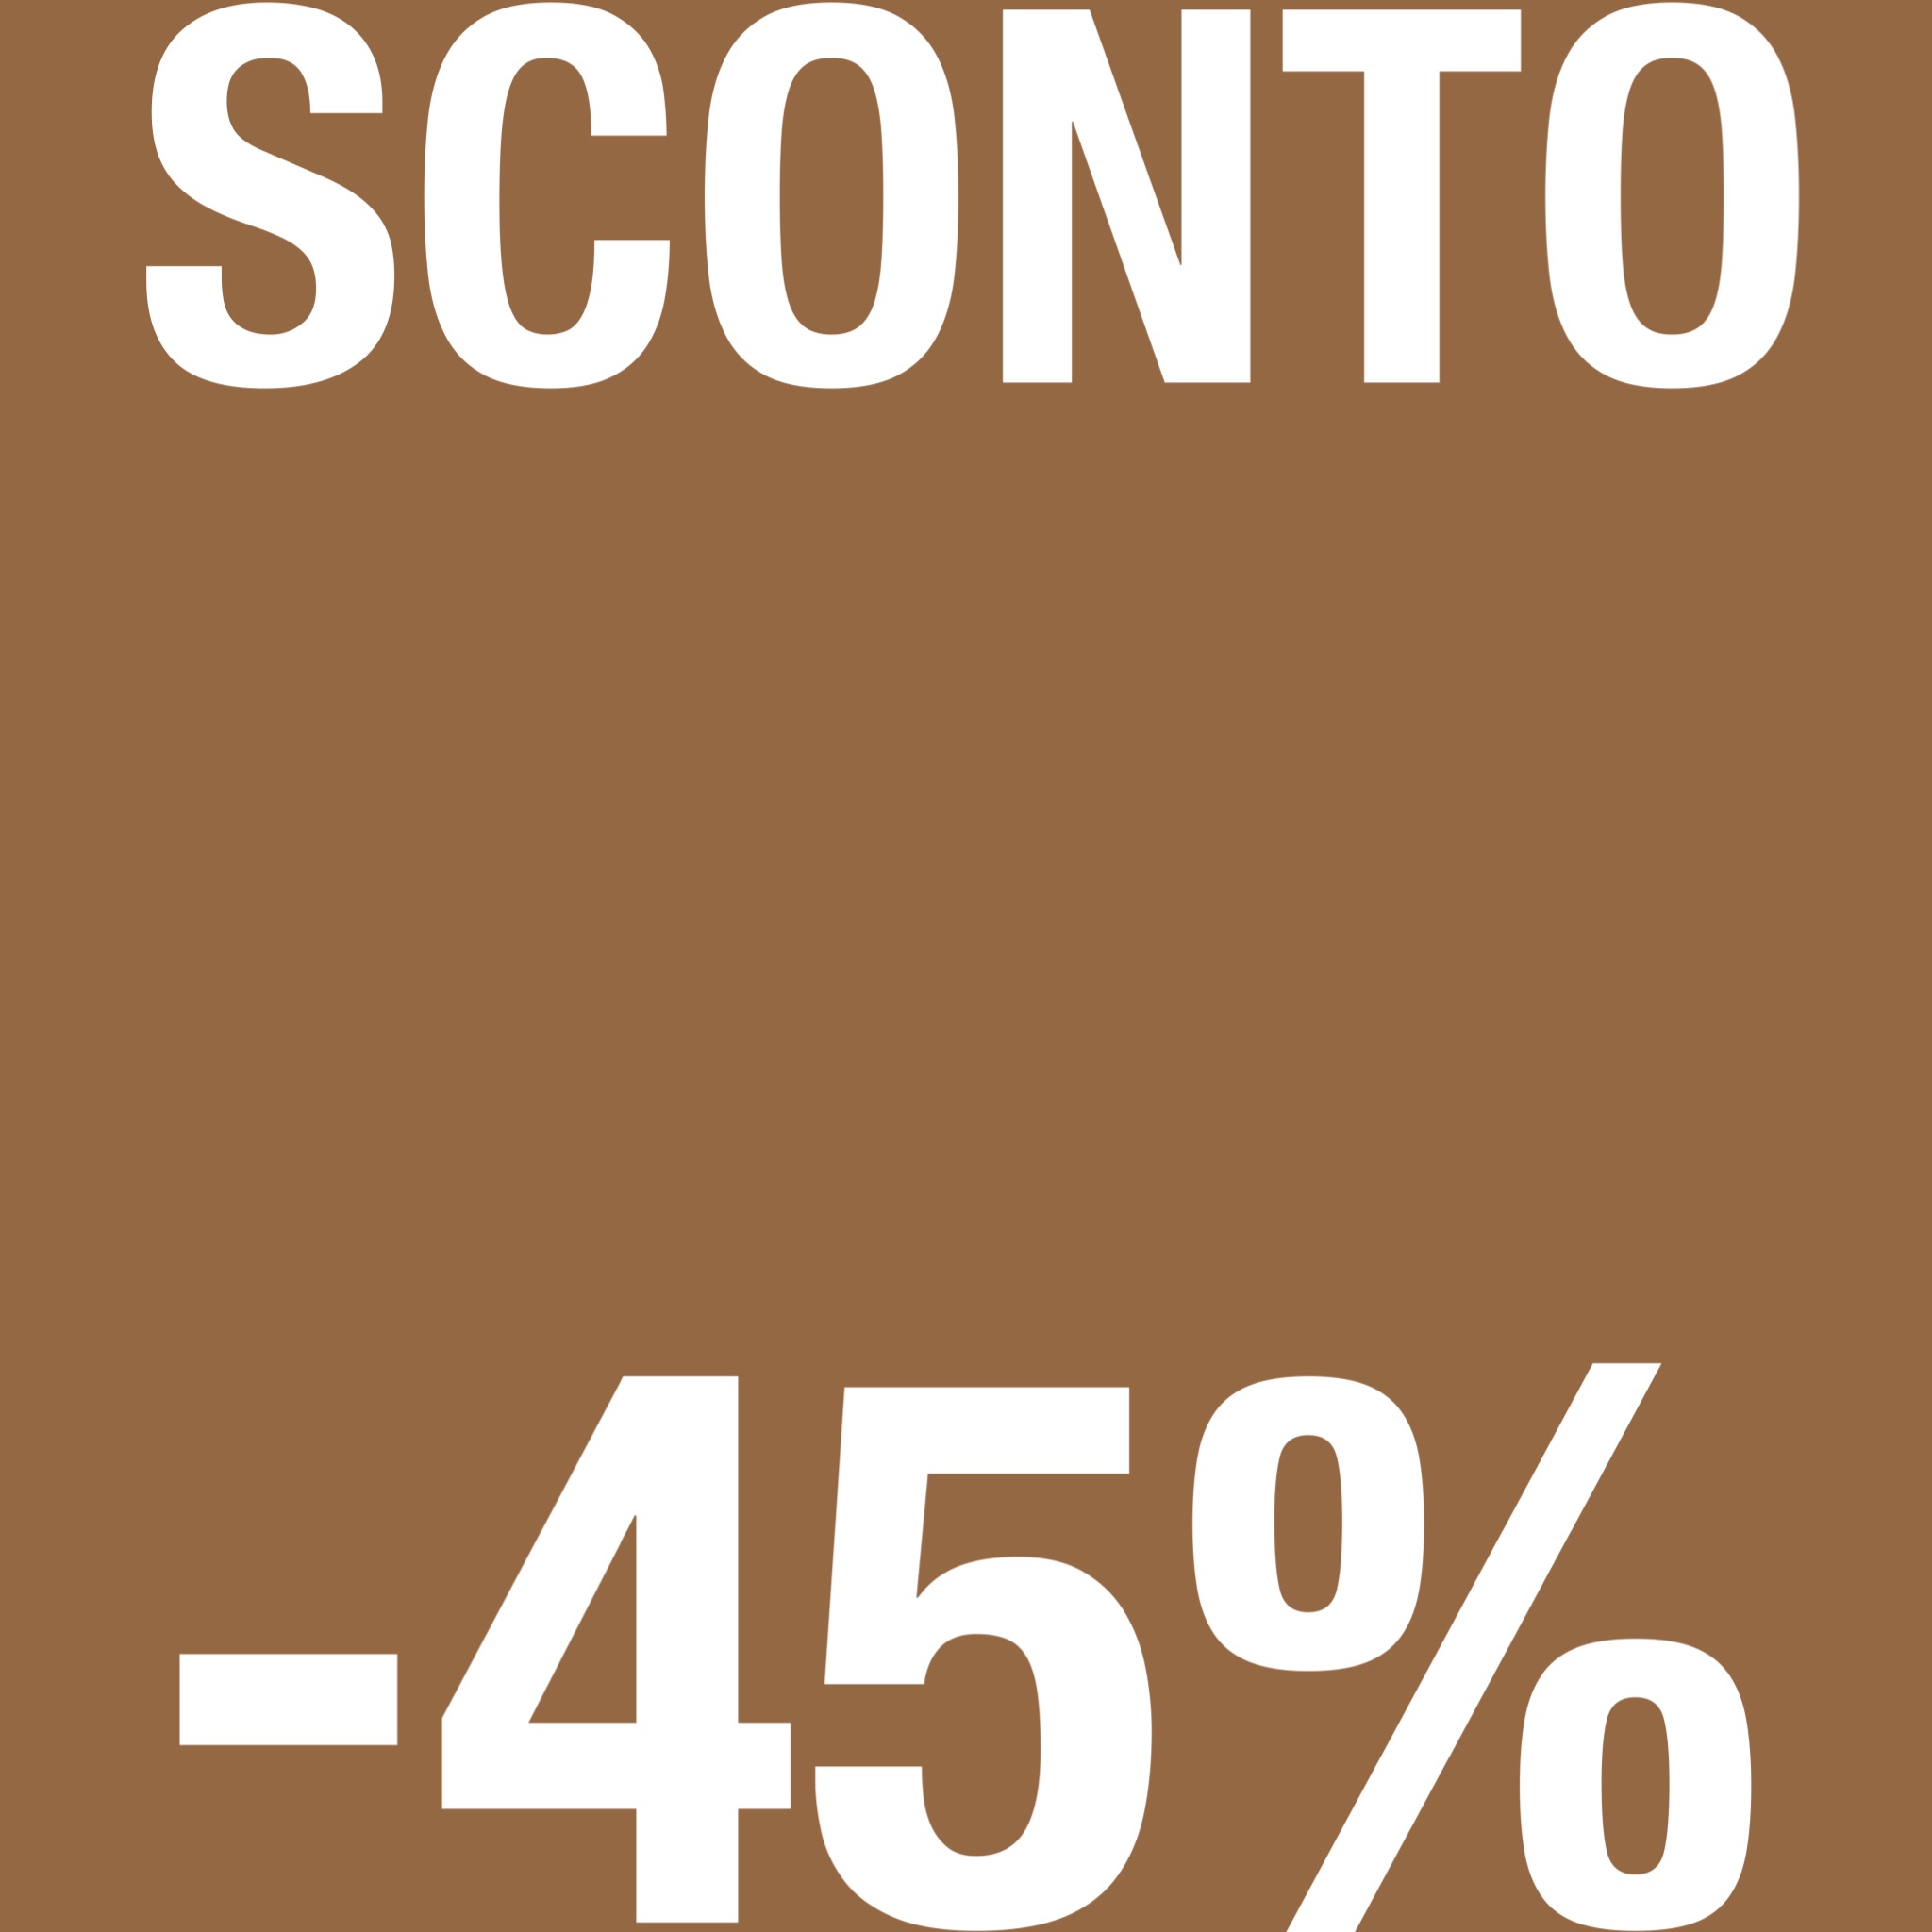 SCONTO 45%